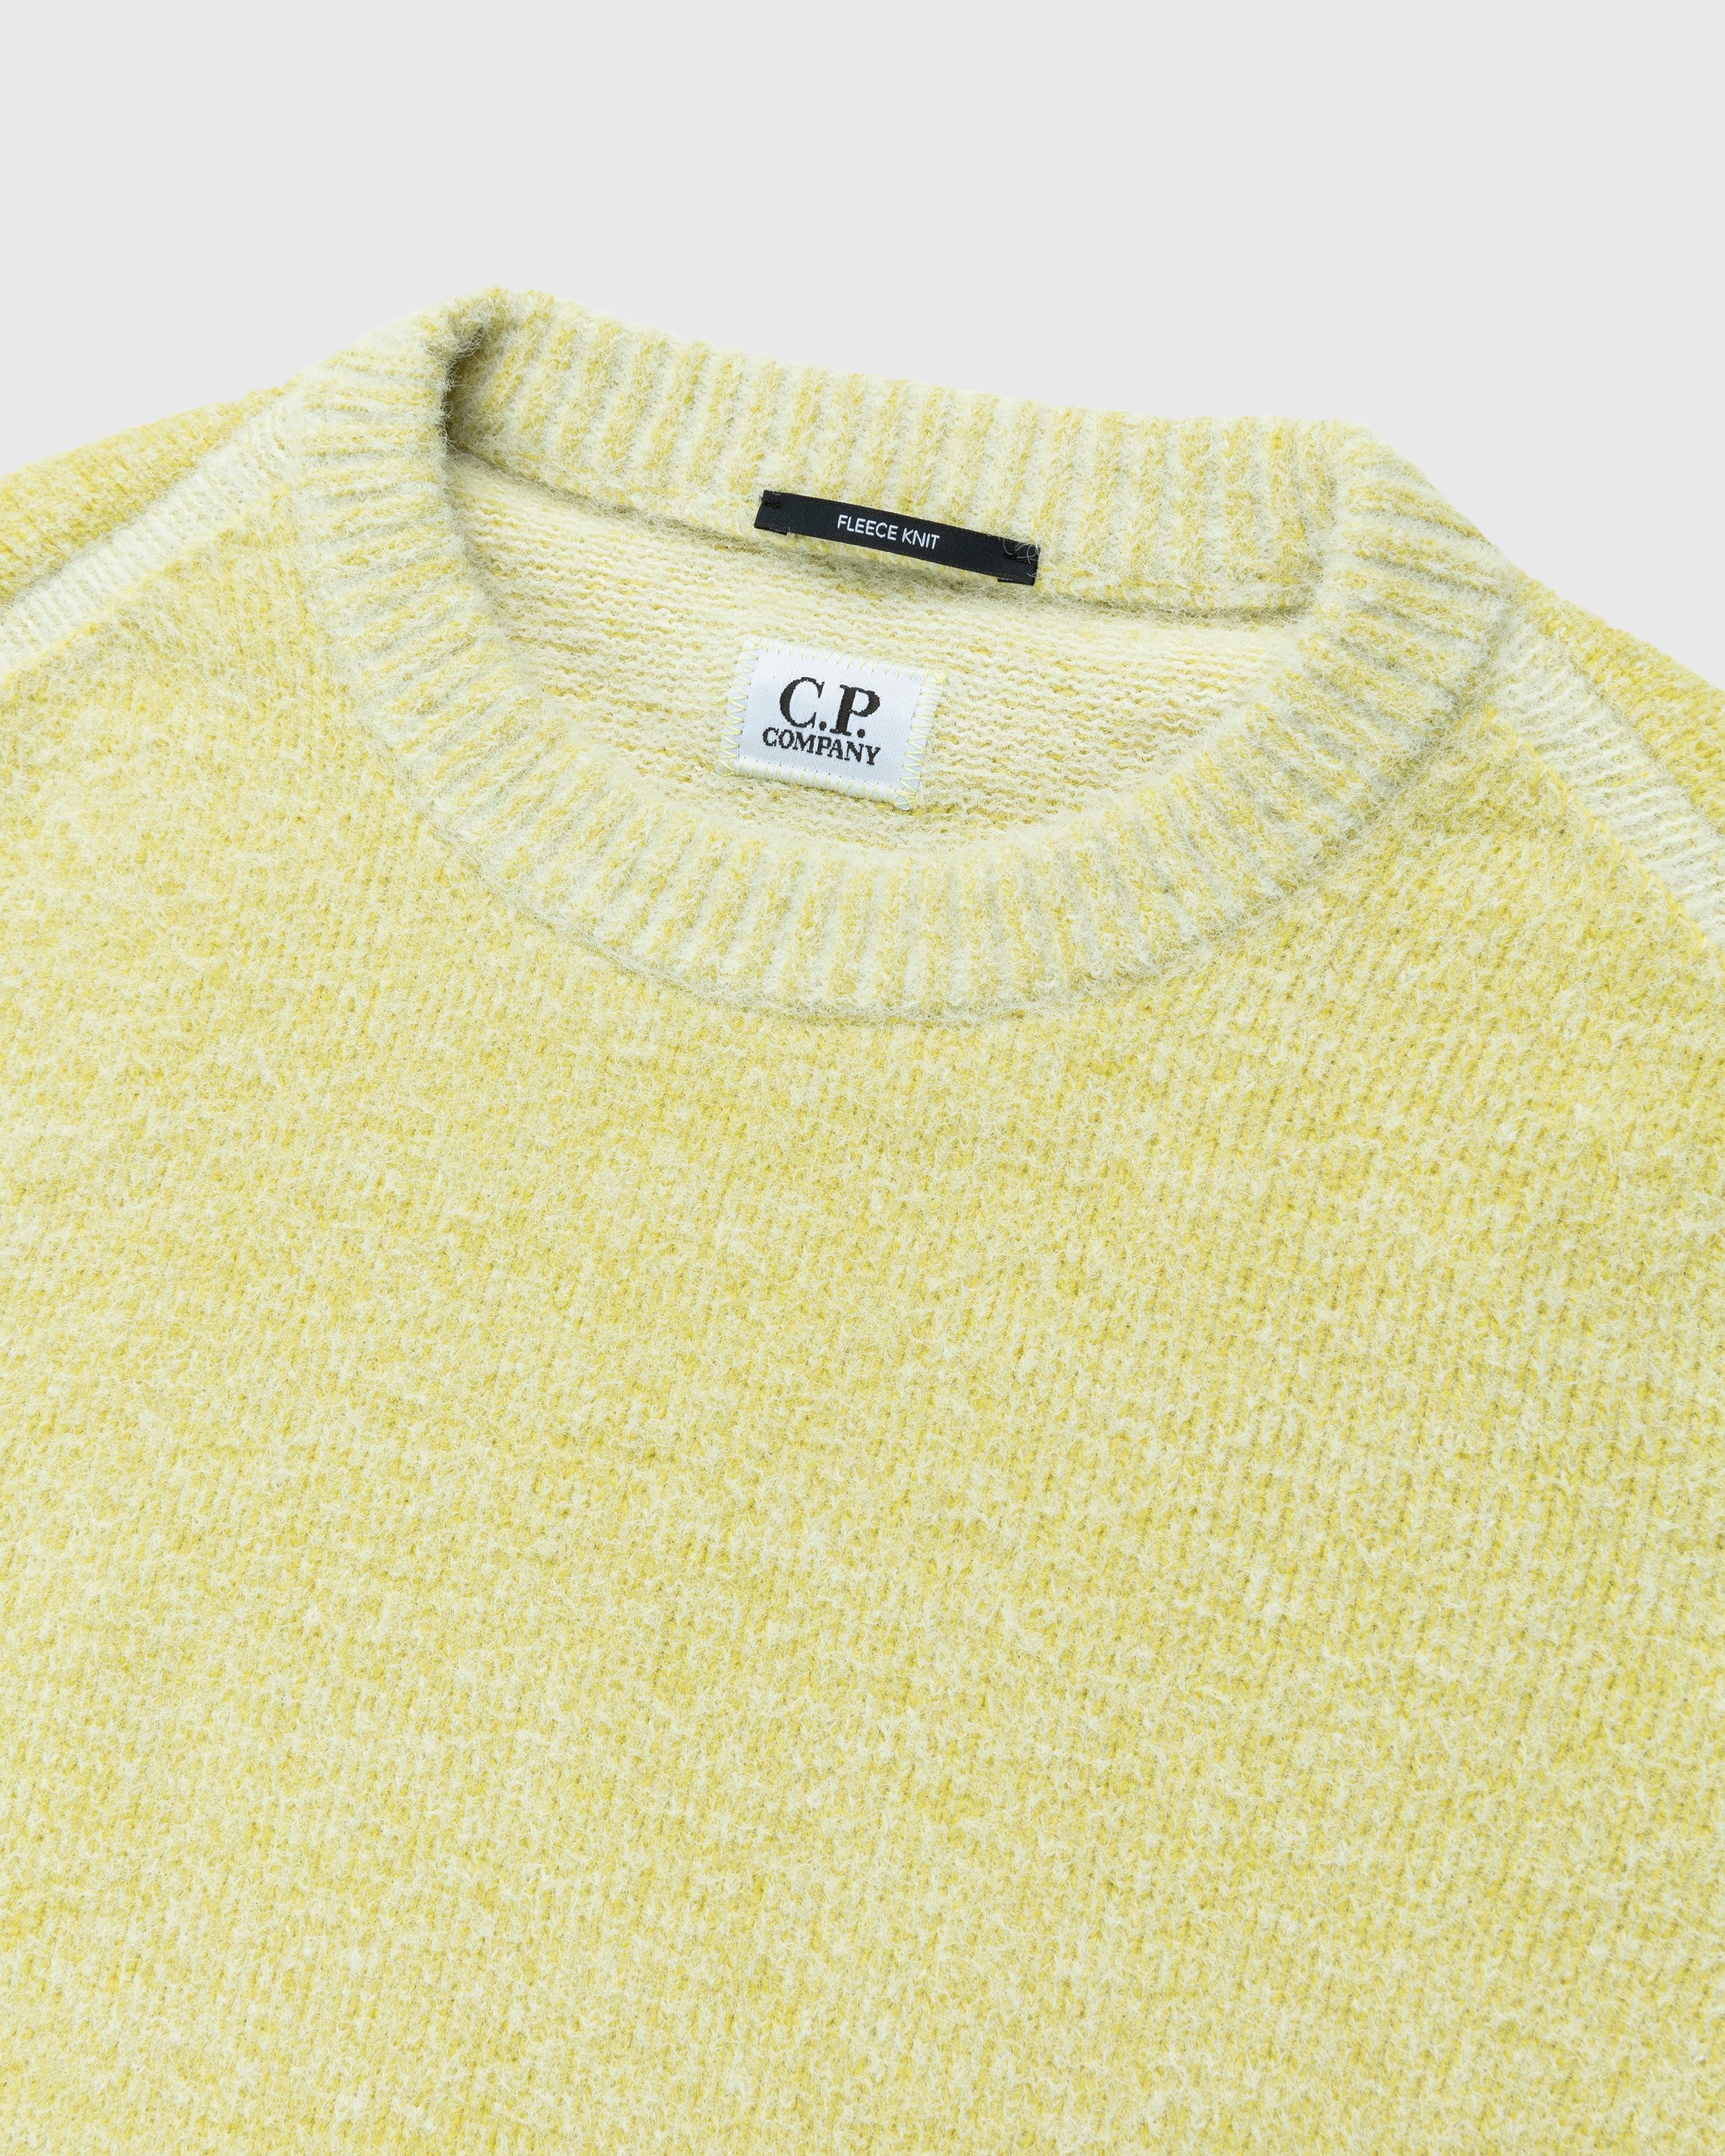 C.P. Company - Fleece Knit Jumper Yellow - Clothing - Yellow - Image 3